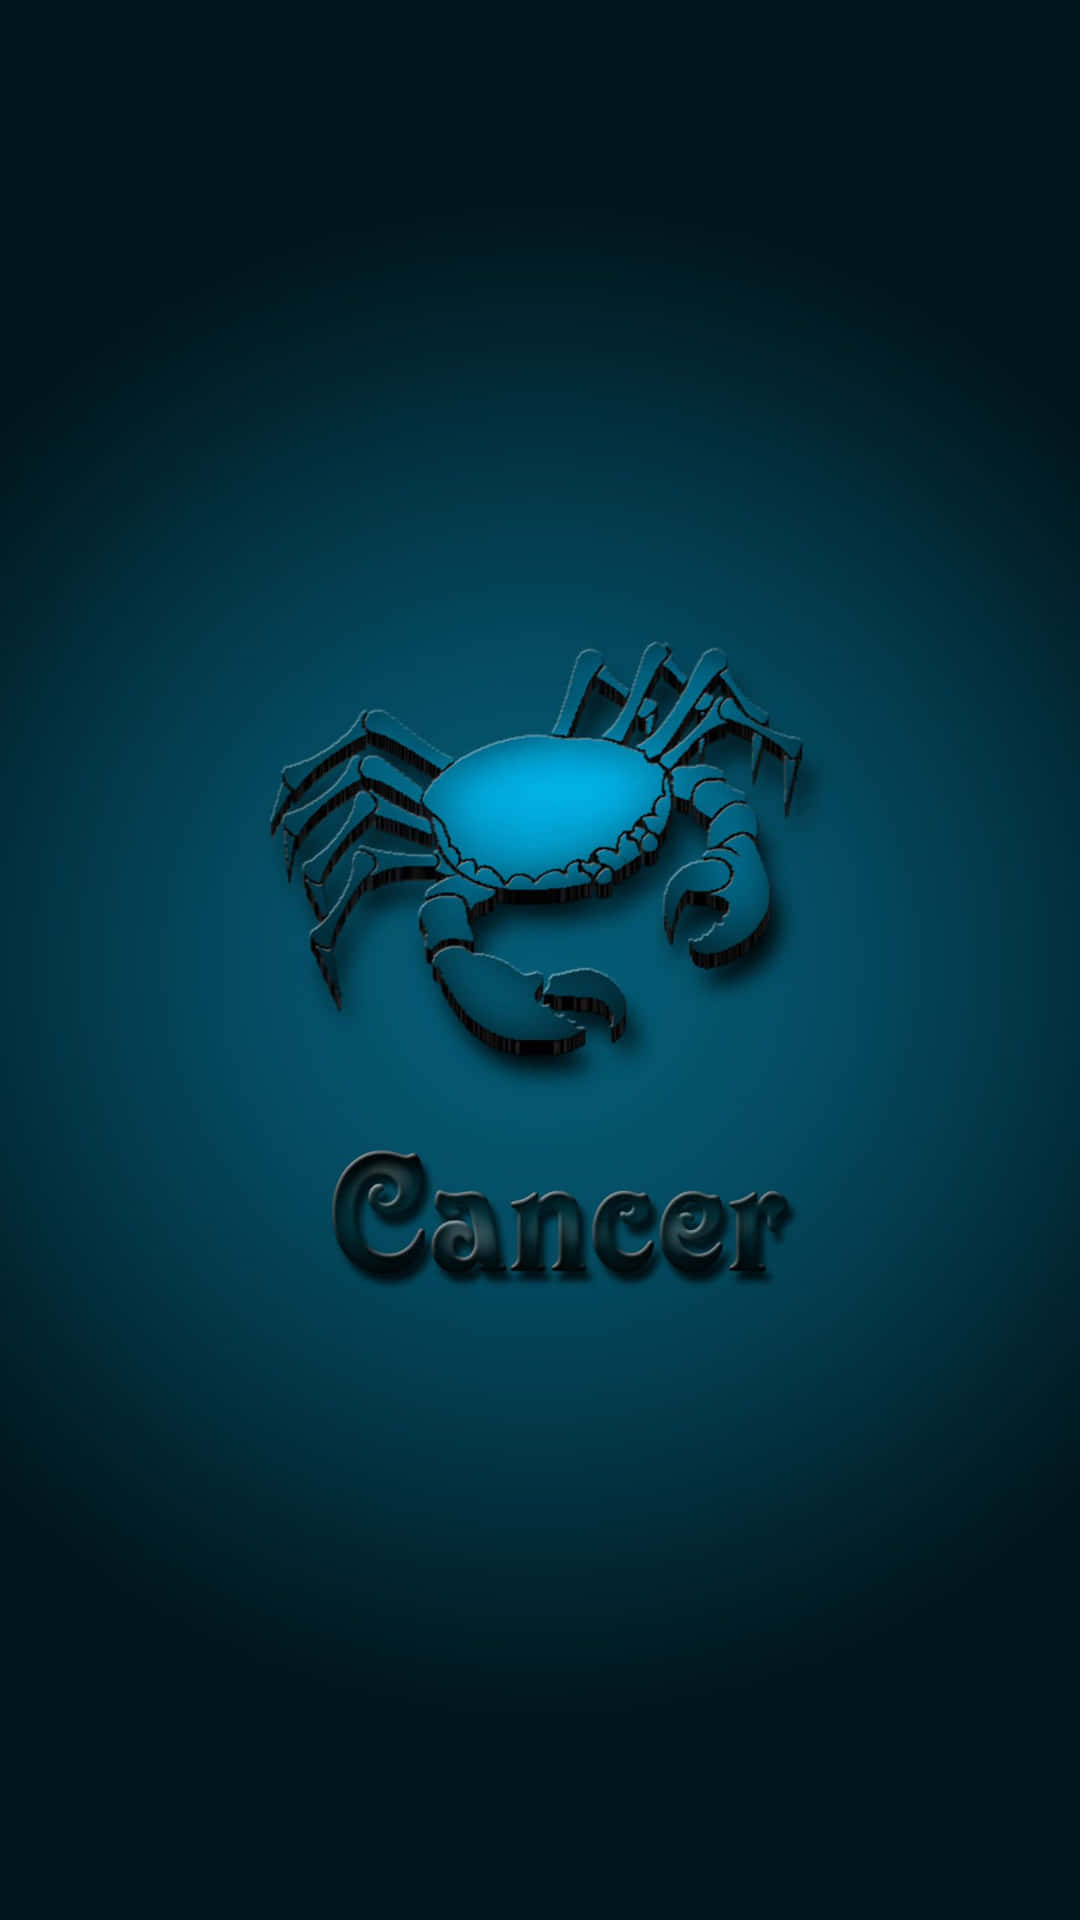 Cancer Zodiac Sign - A Blue Crab On A Dark Background